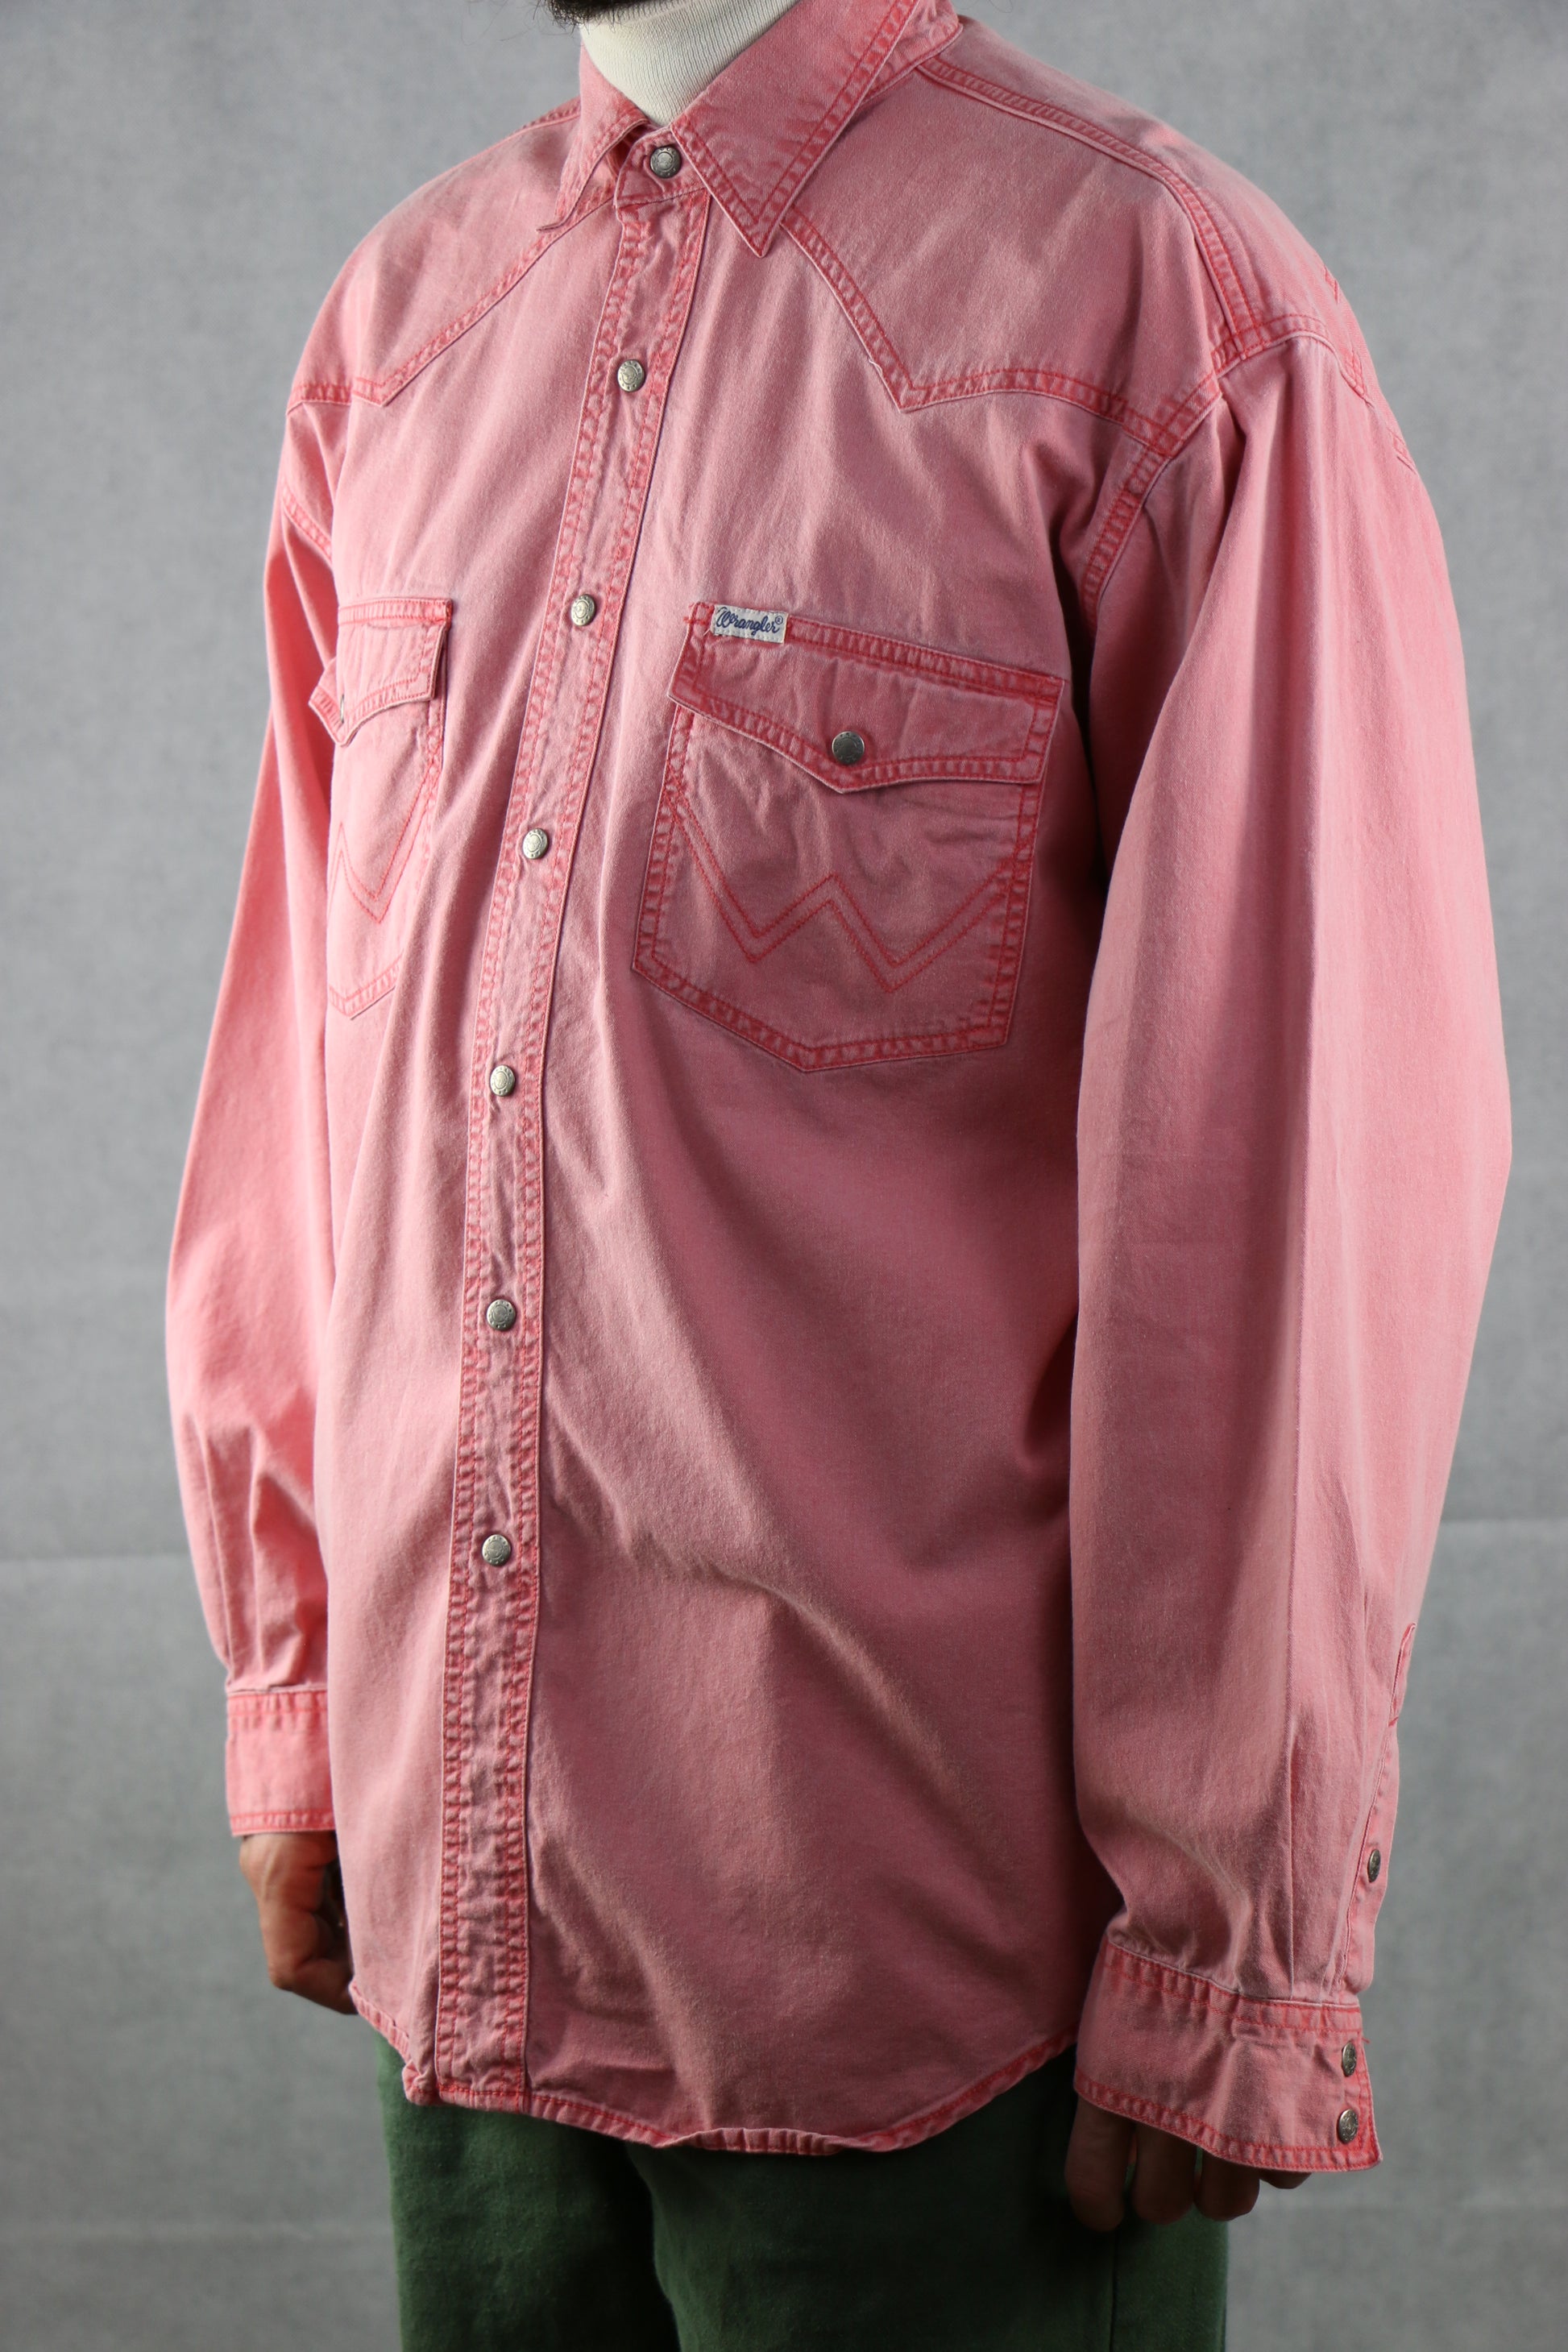 Wrangler Coral Denim Shirt - vintage clothing clochard92.com